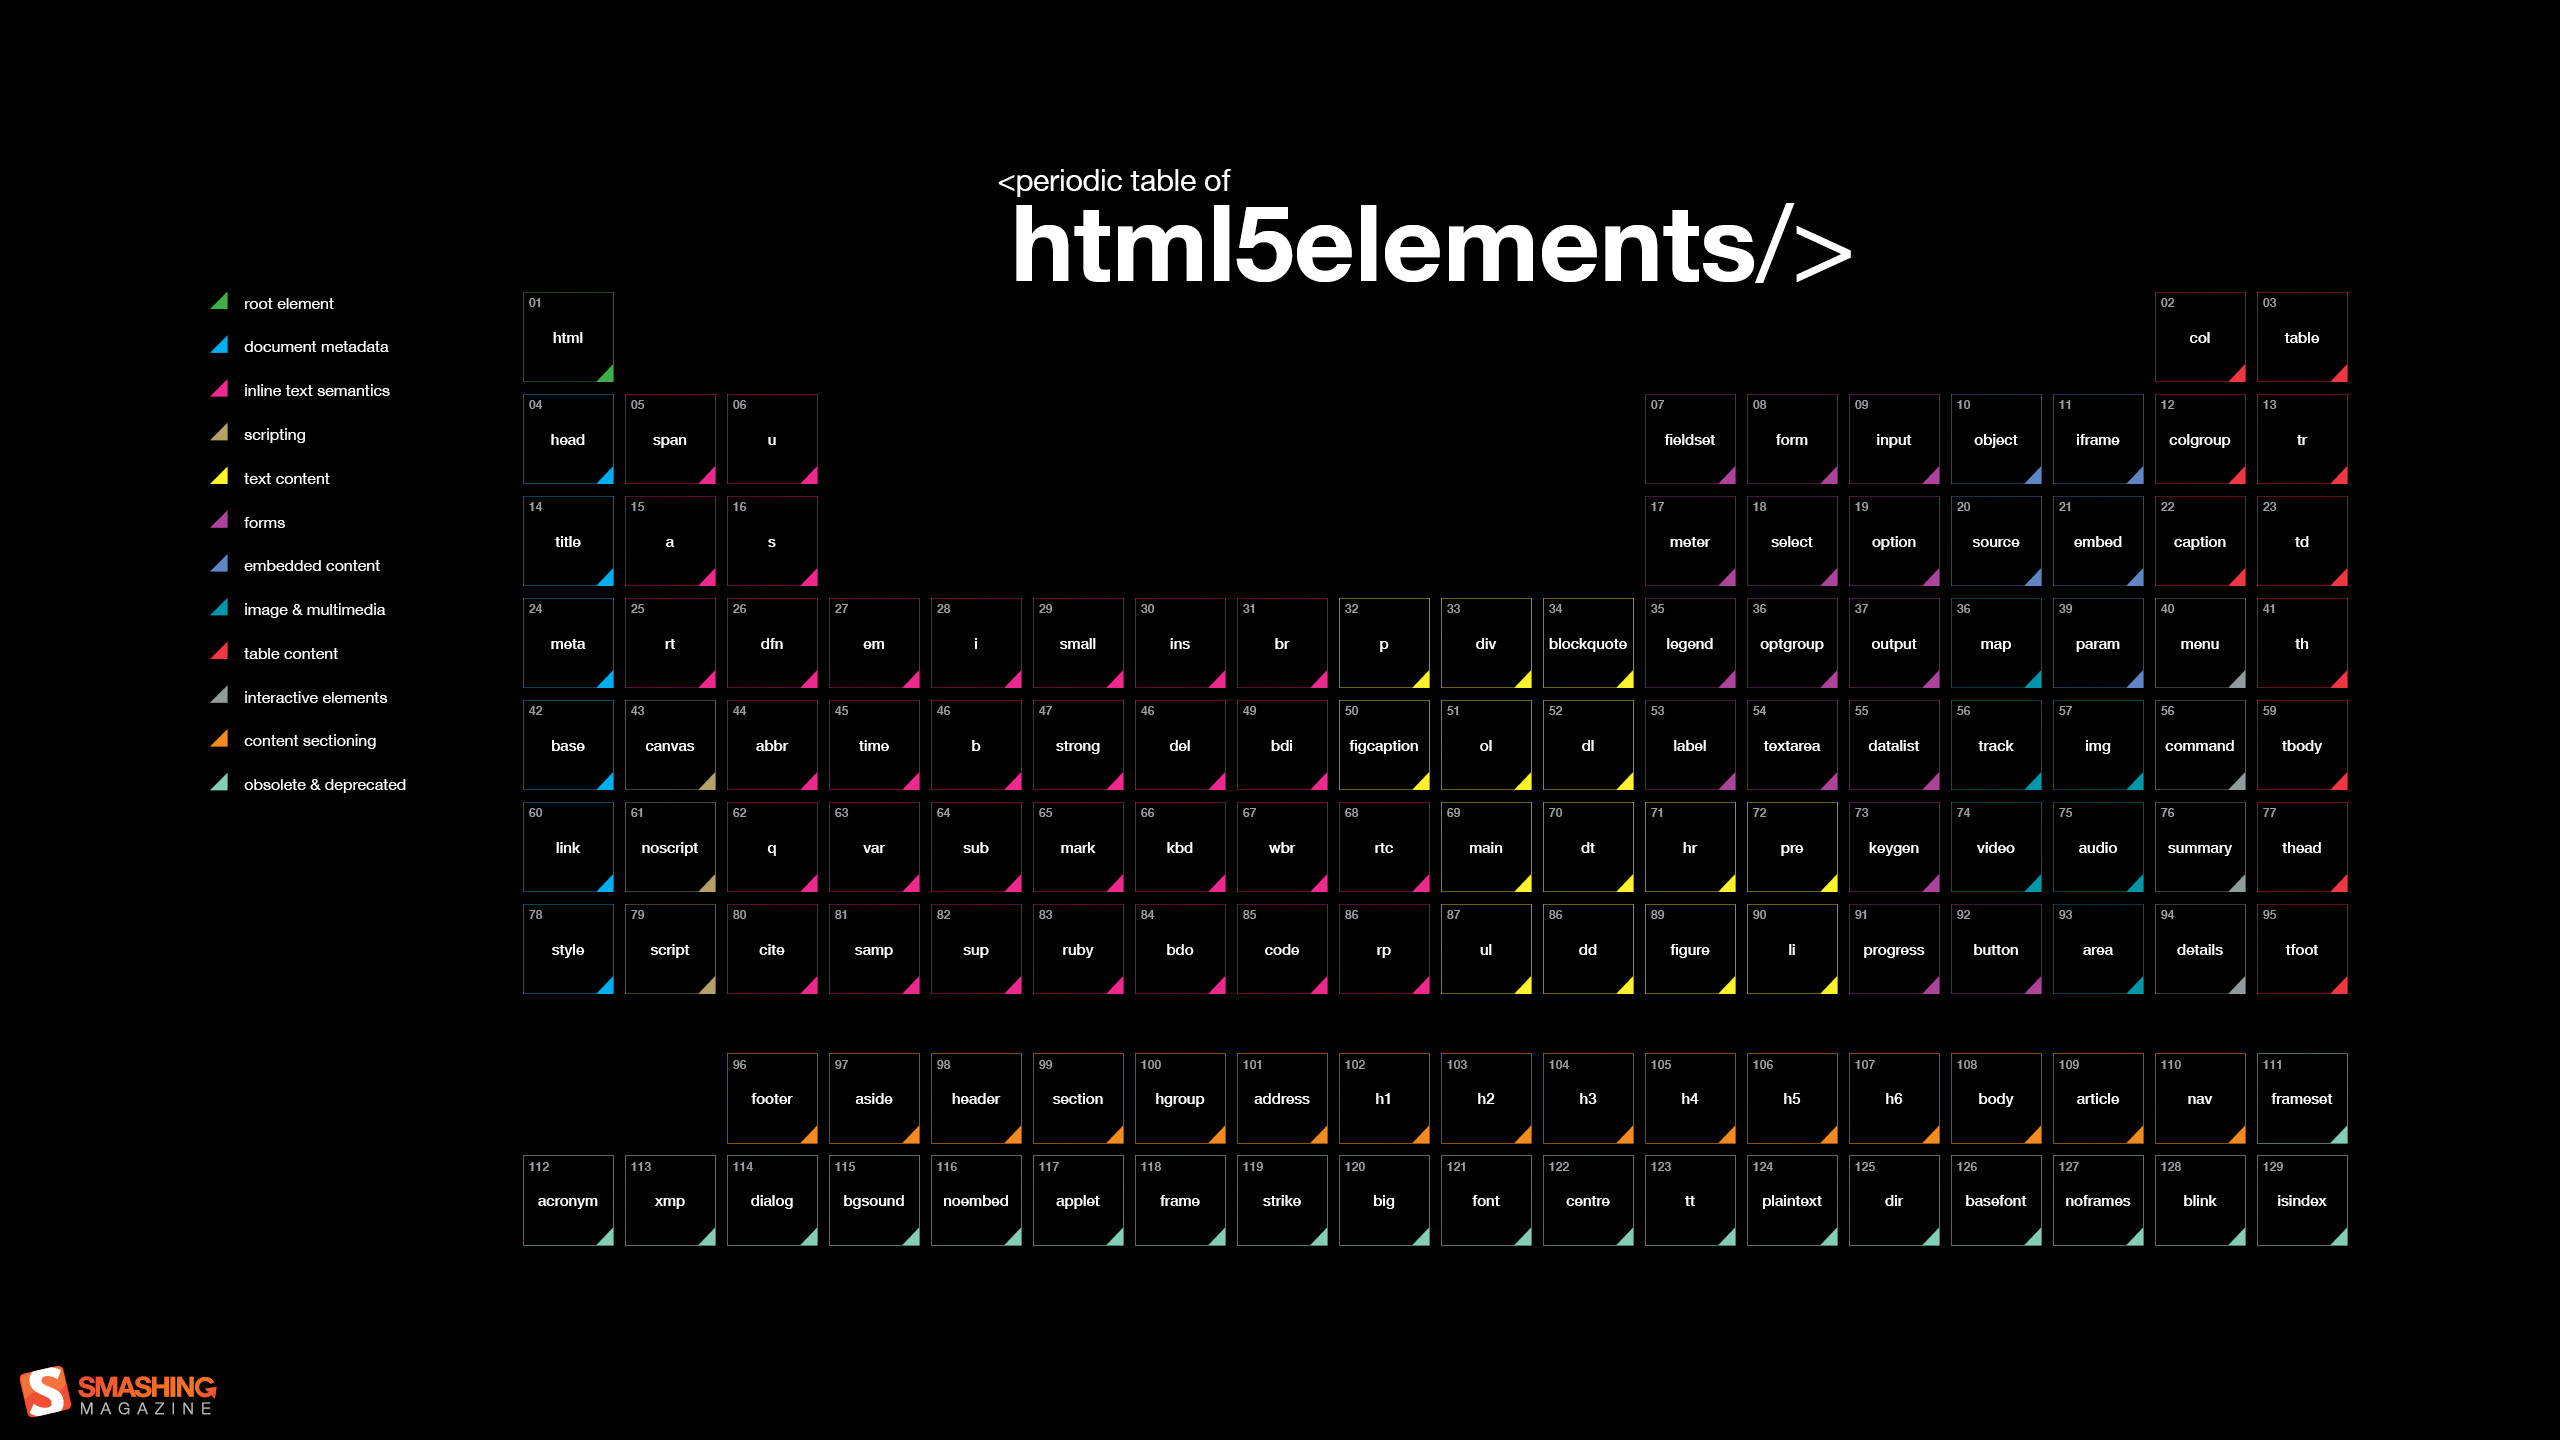 2560x1440 General  HTML code programming periodic table black background  Smashing Magazine diagrams computer